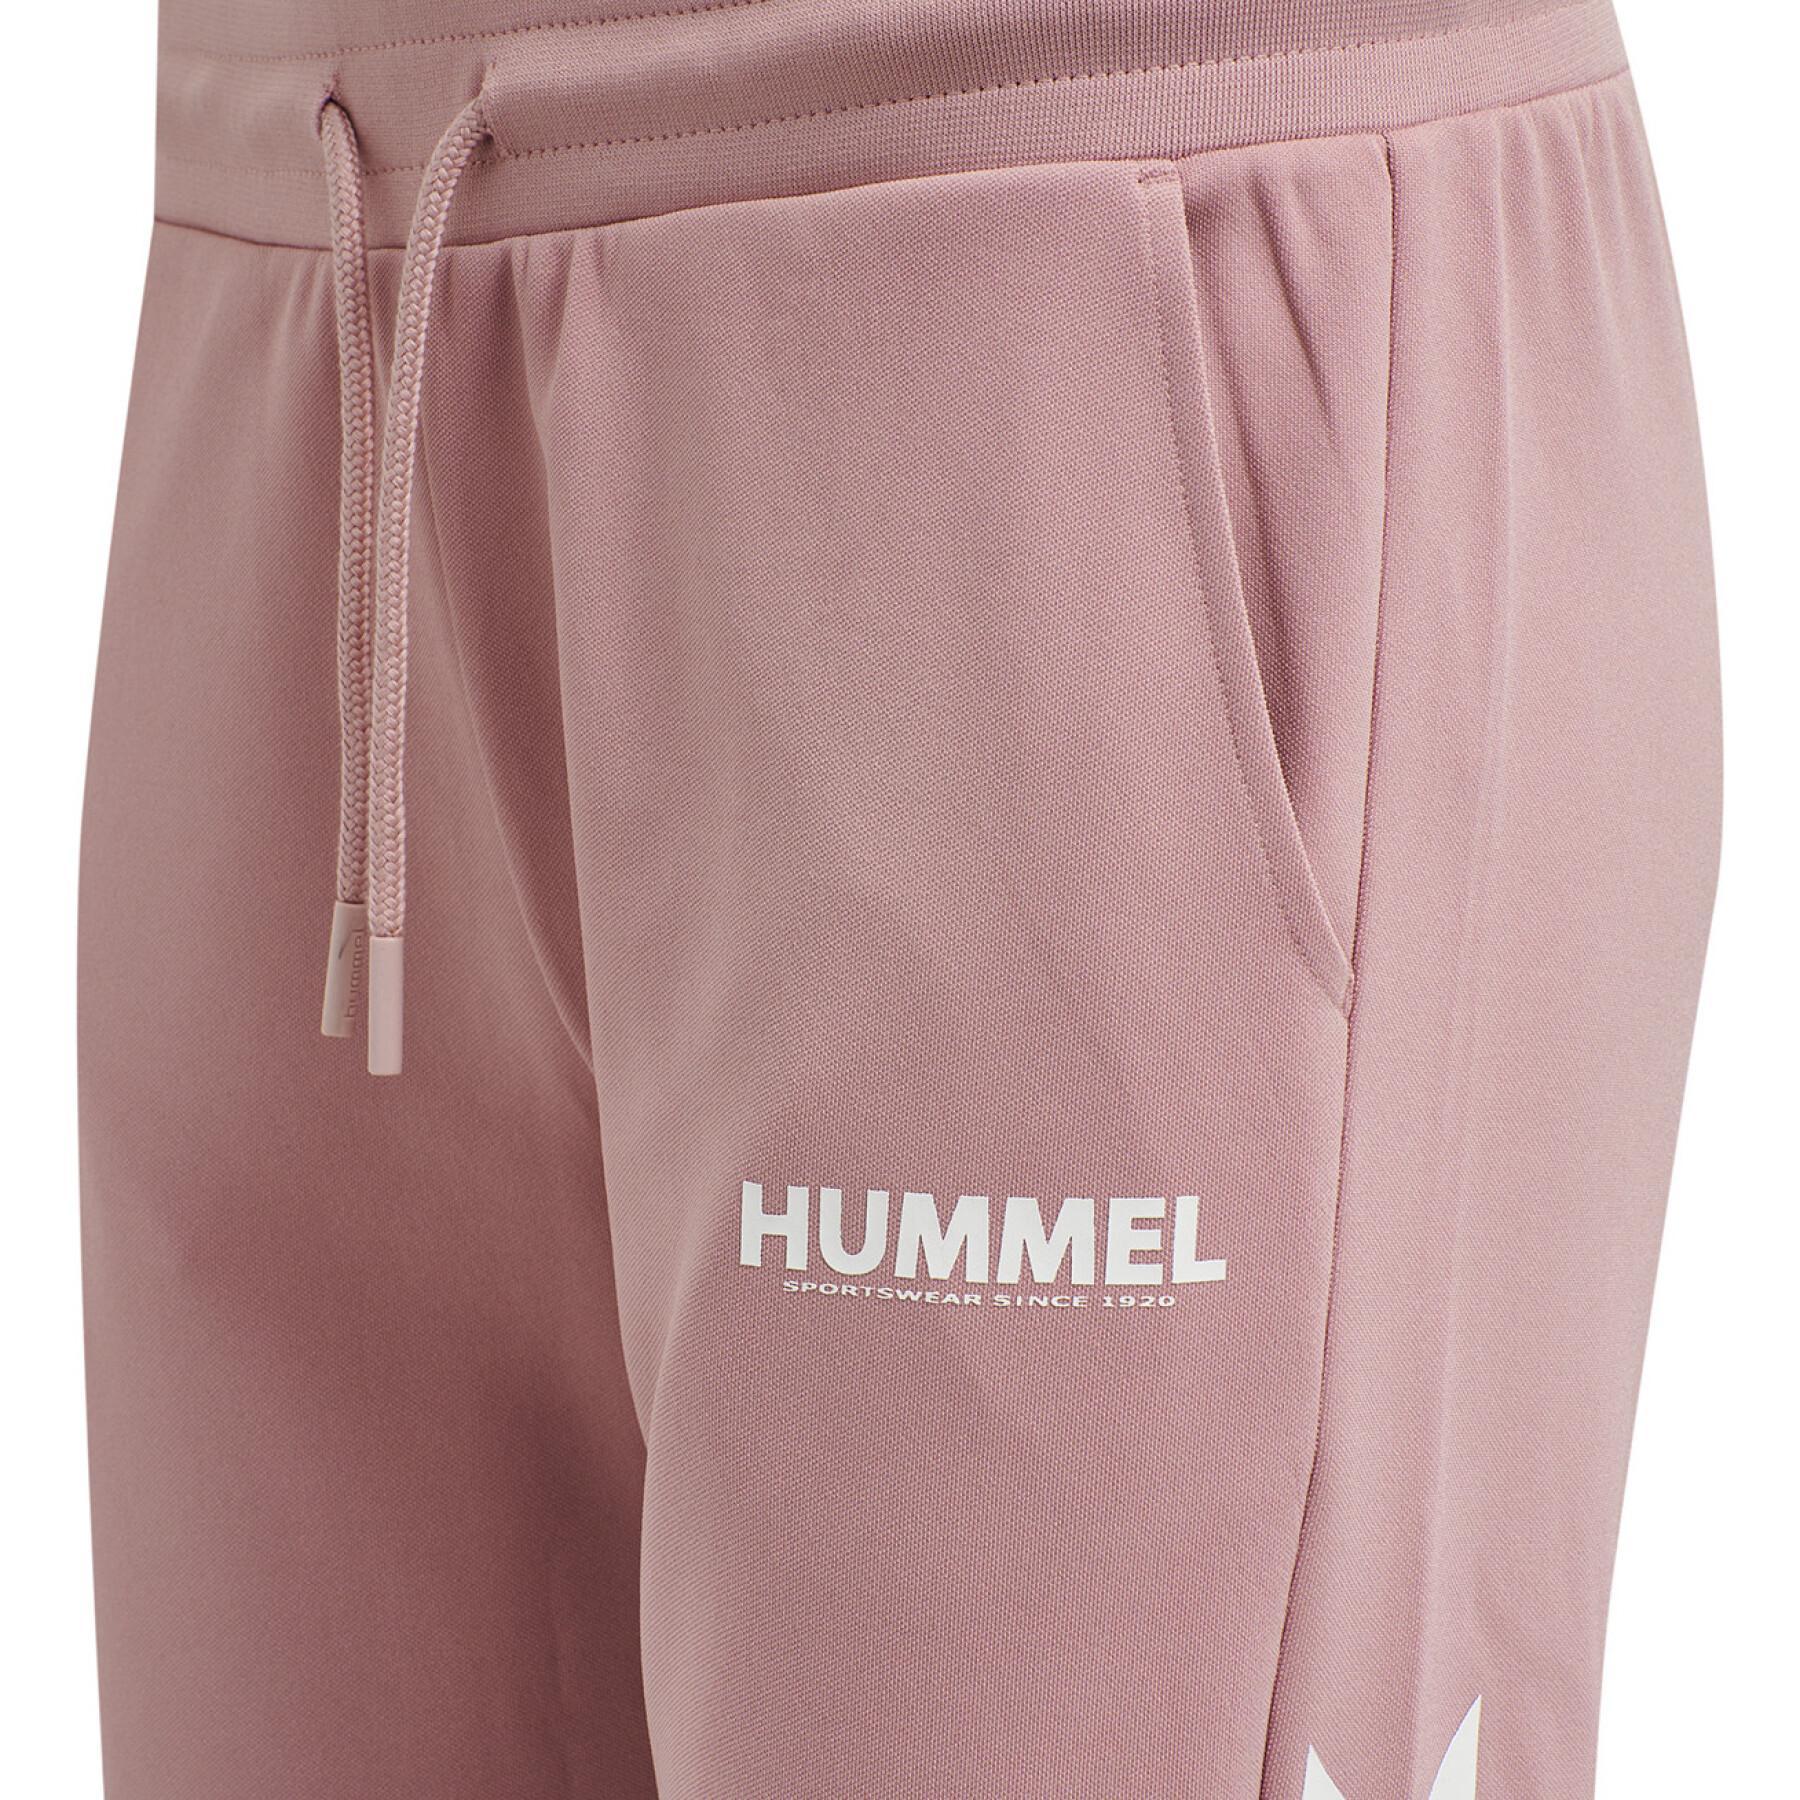 Calças femininas Hummel hmllegacy